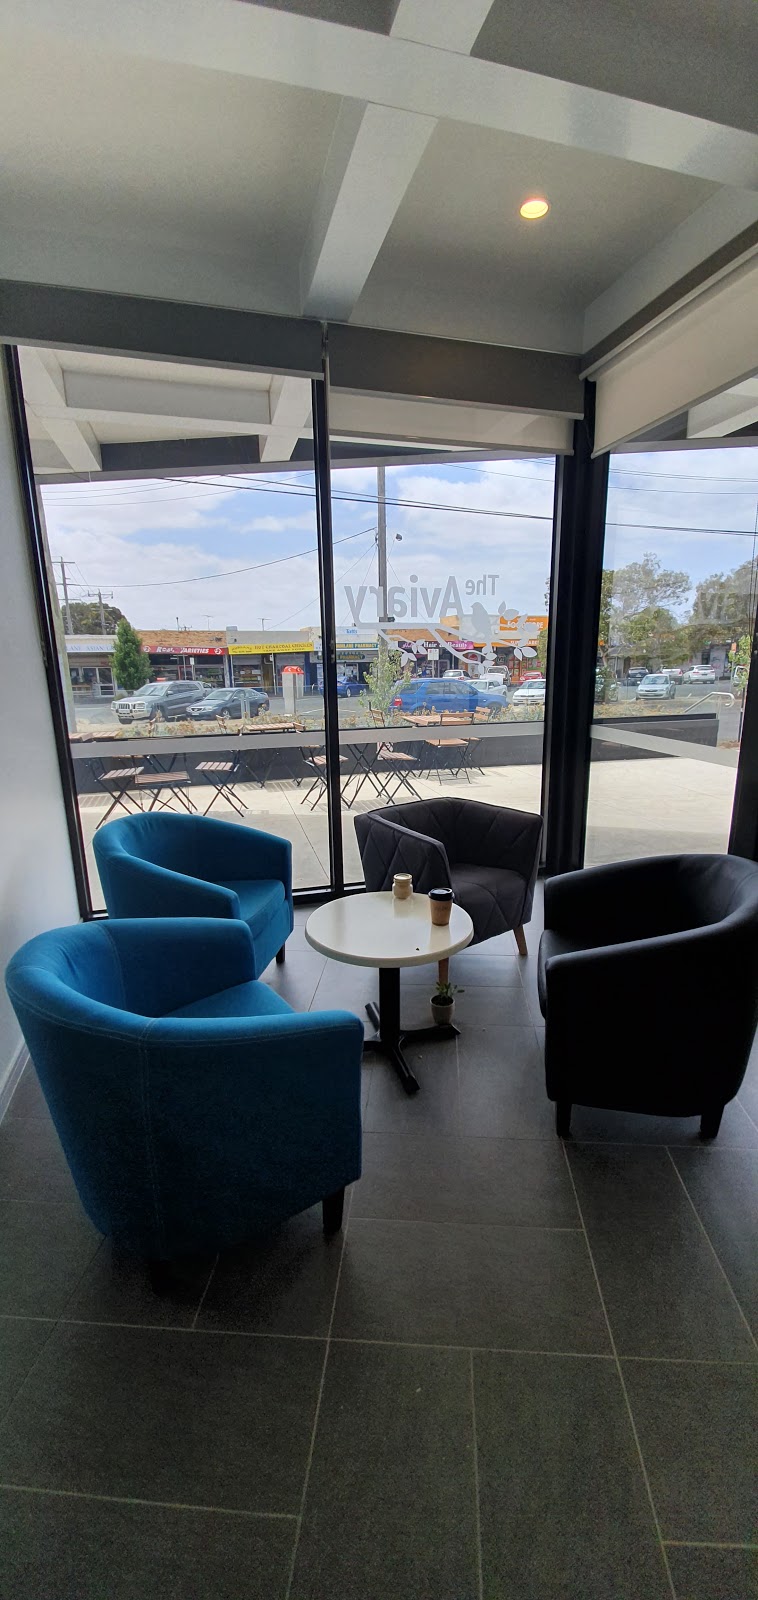 The Aviary Cafe | cafe | 45 Robin Ave, Norlane VIC 3214, Australia